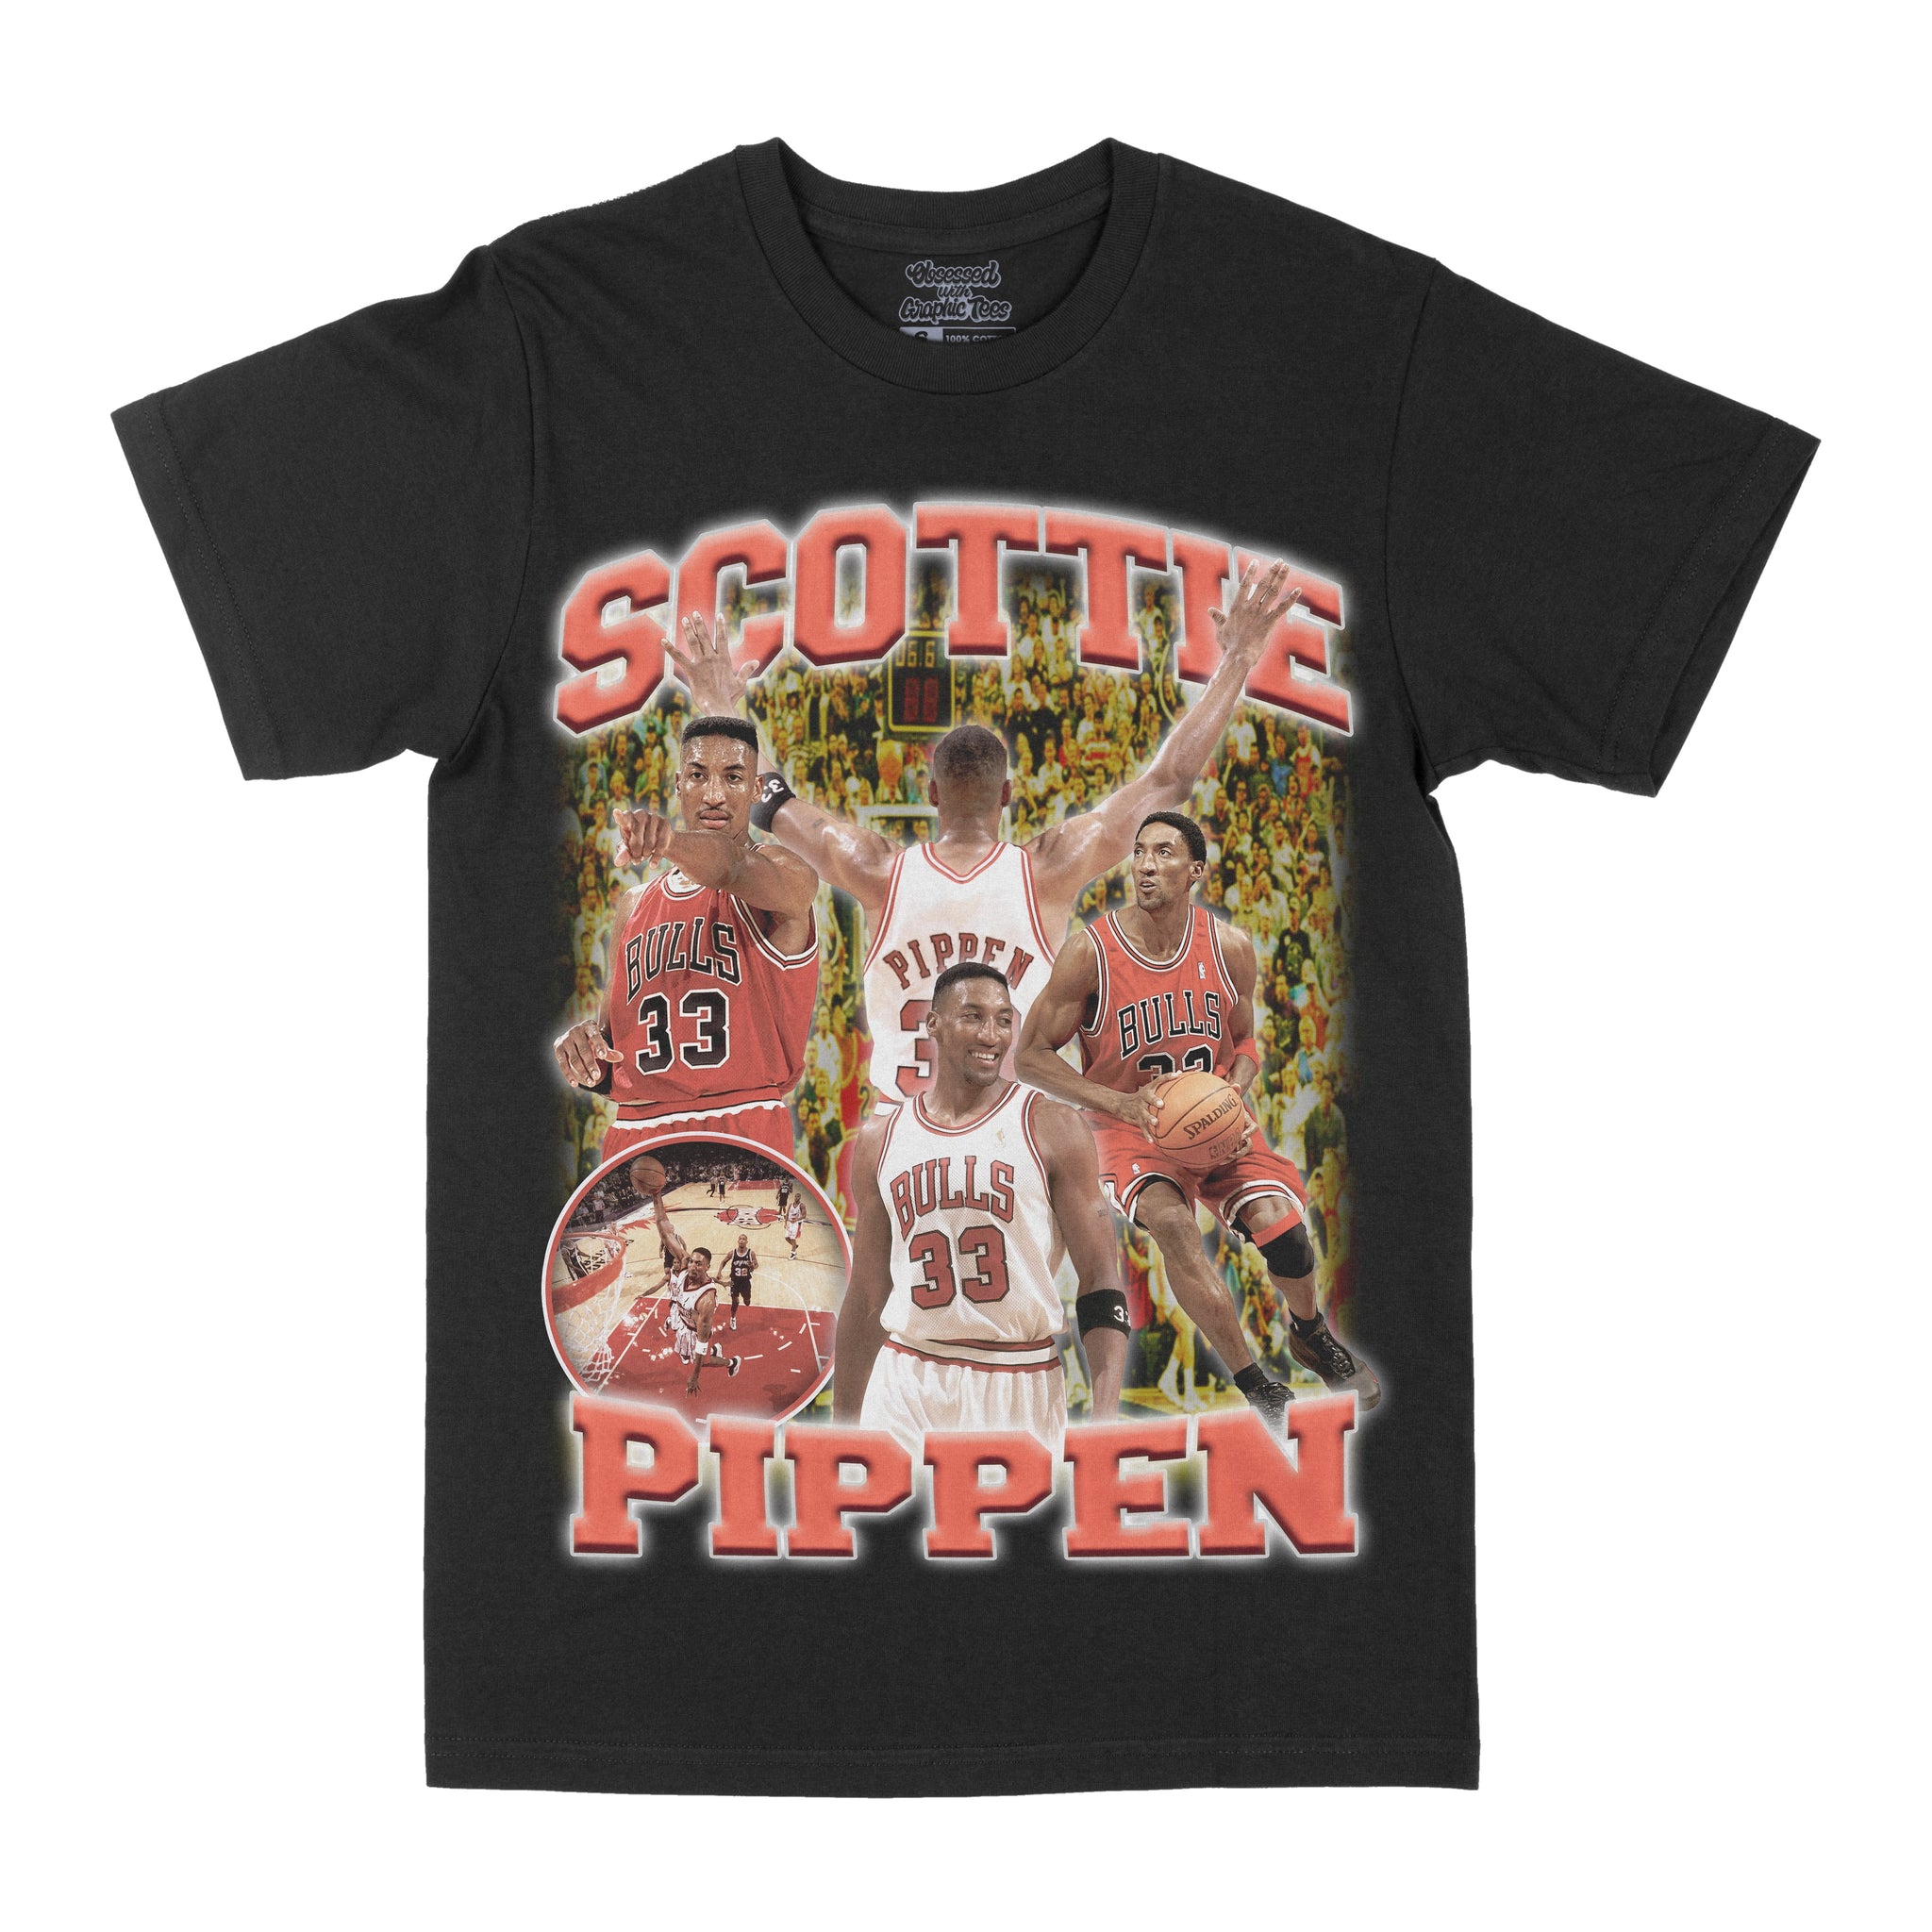 Scottie Pippen Graphic Tee Adult Large / White / Regular Heavyweight